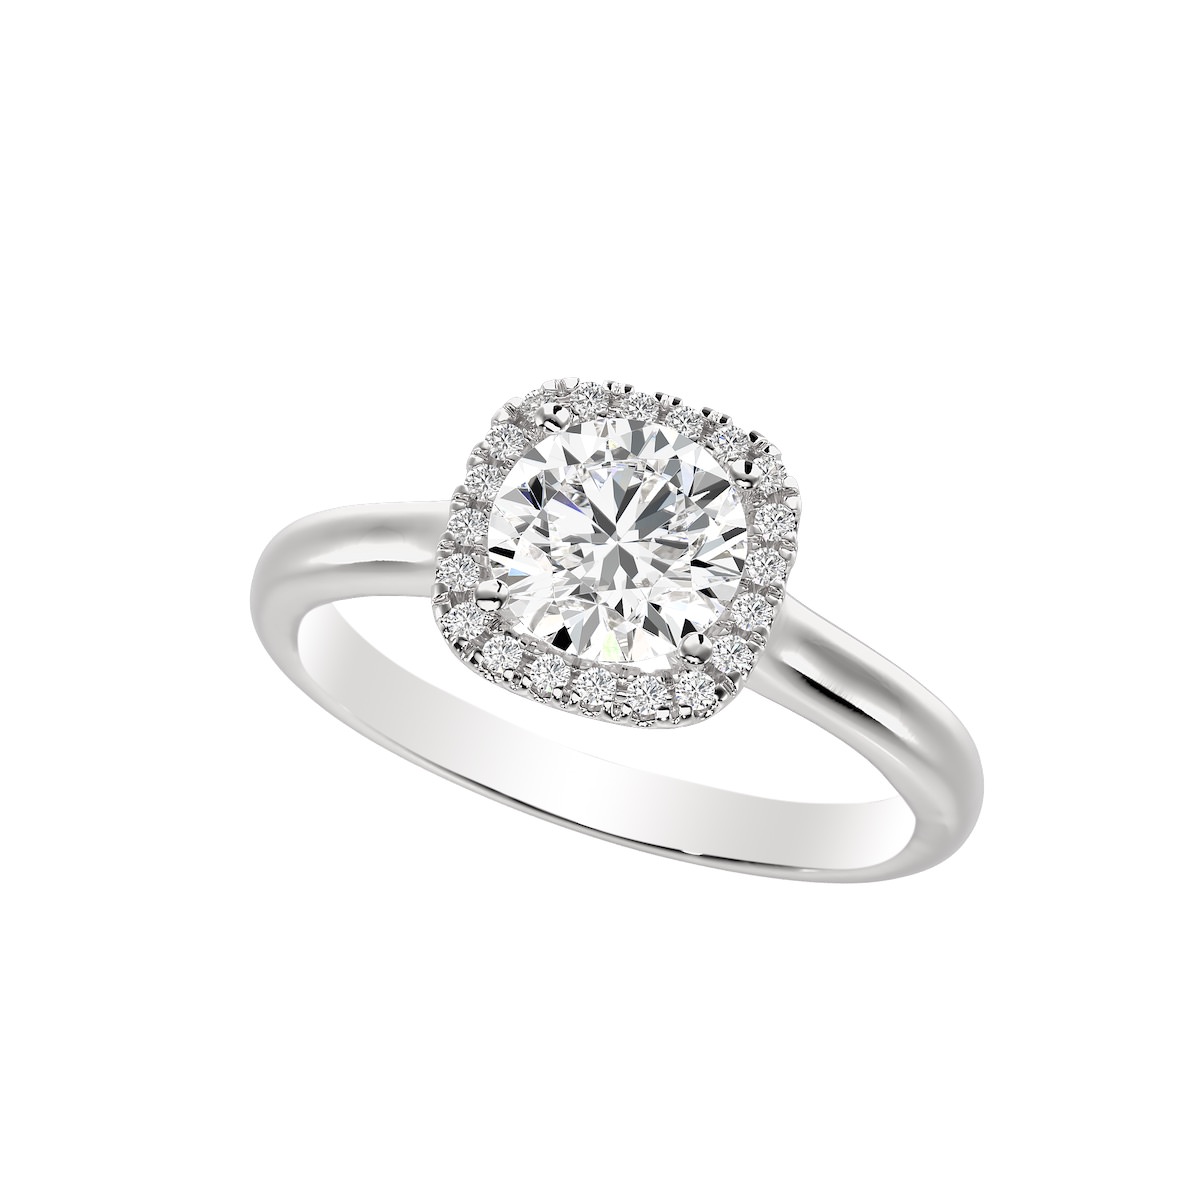 Lab Grown Diamond Engagement Ring by LovBe - Platinum Cushion Cut Halo